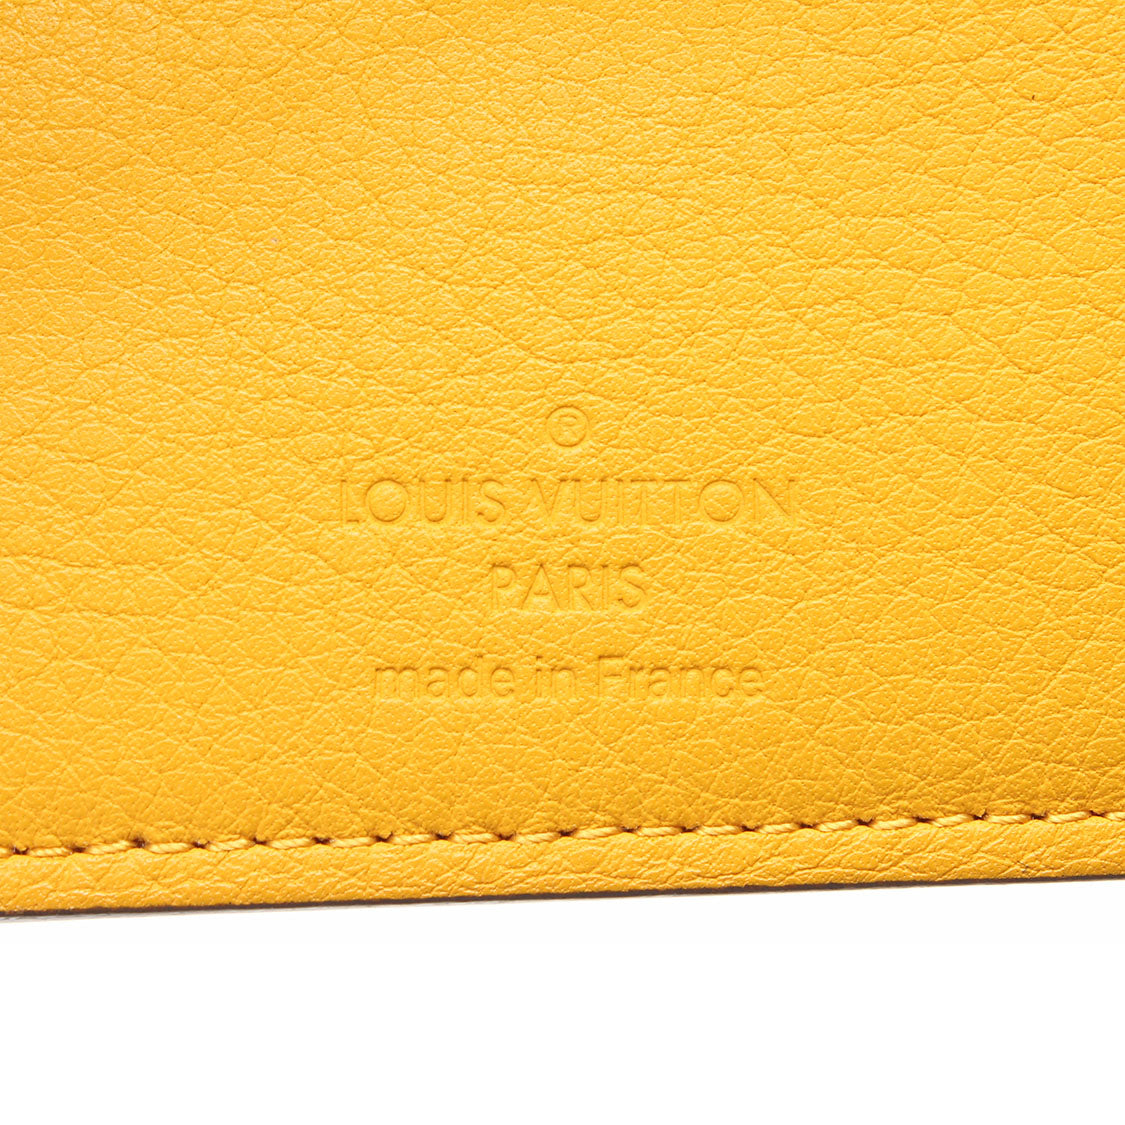 Louis Vuitton Epi Bifold Wallet - We sell Rolex's & Louis Vuitton Bags